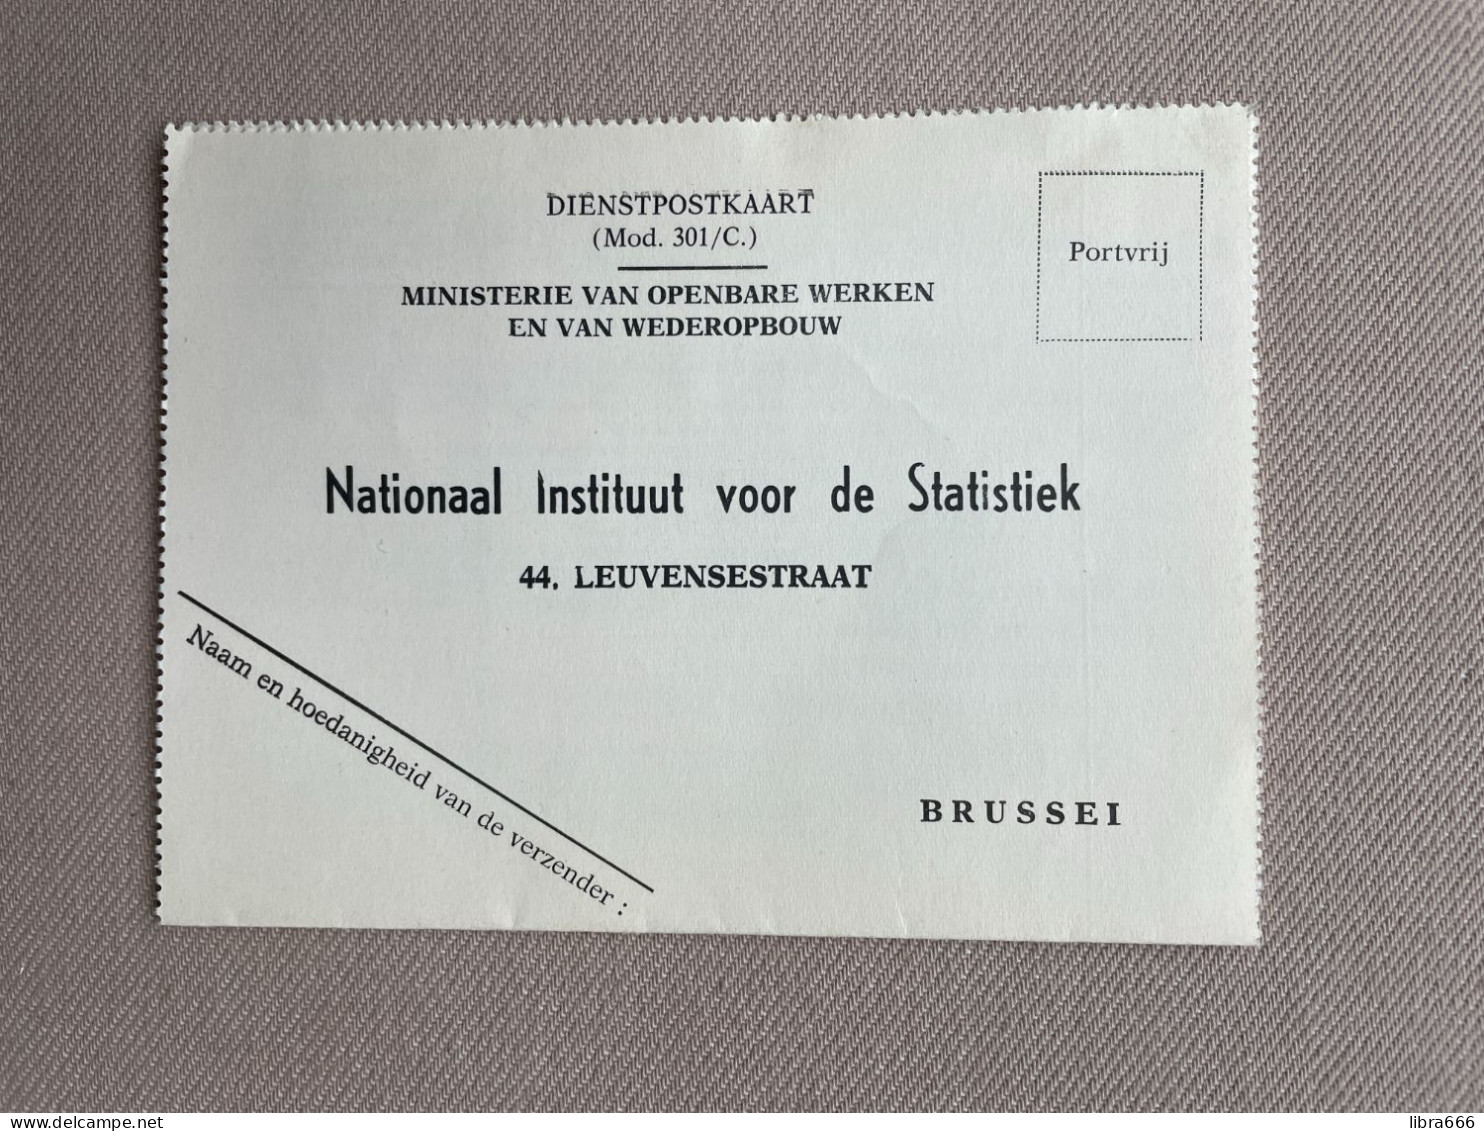 DIENSTPOSTKAART Mod. 301/C - 1963 - Ministerie Van Openbare Werken En Van Wederopbouw - NIS Brussel - Postcards 1951-..